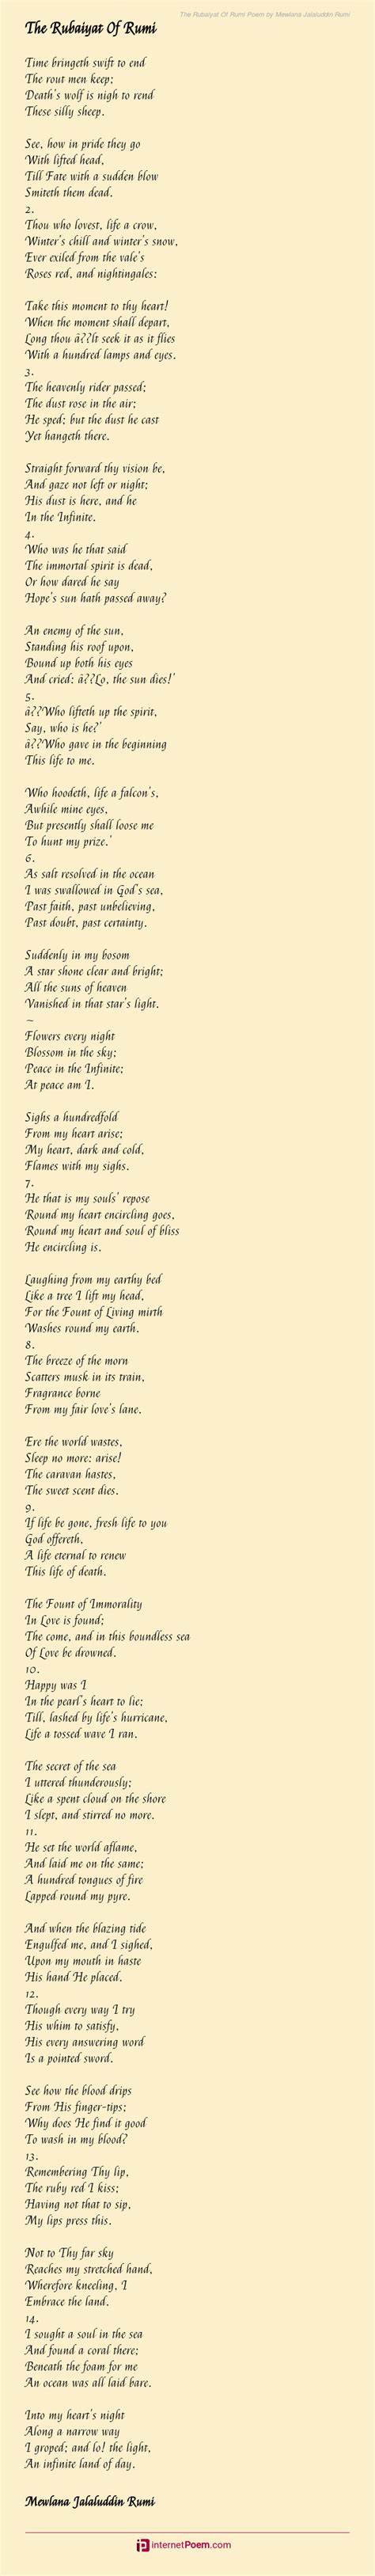 The Rubaiyat Of Rumi Poem By Mewlana Jalaluddin Rumi